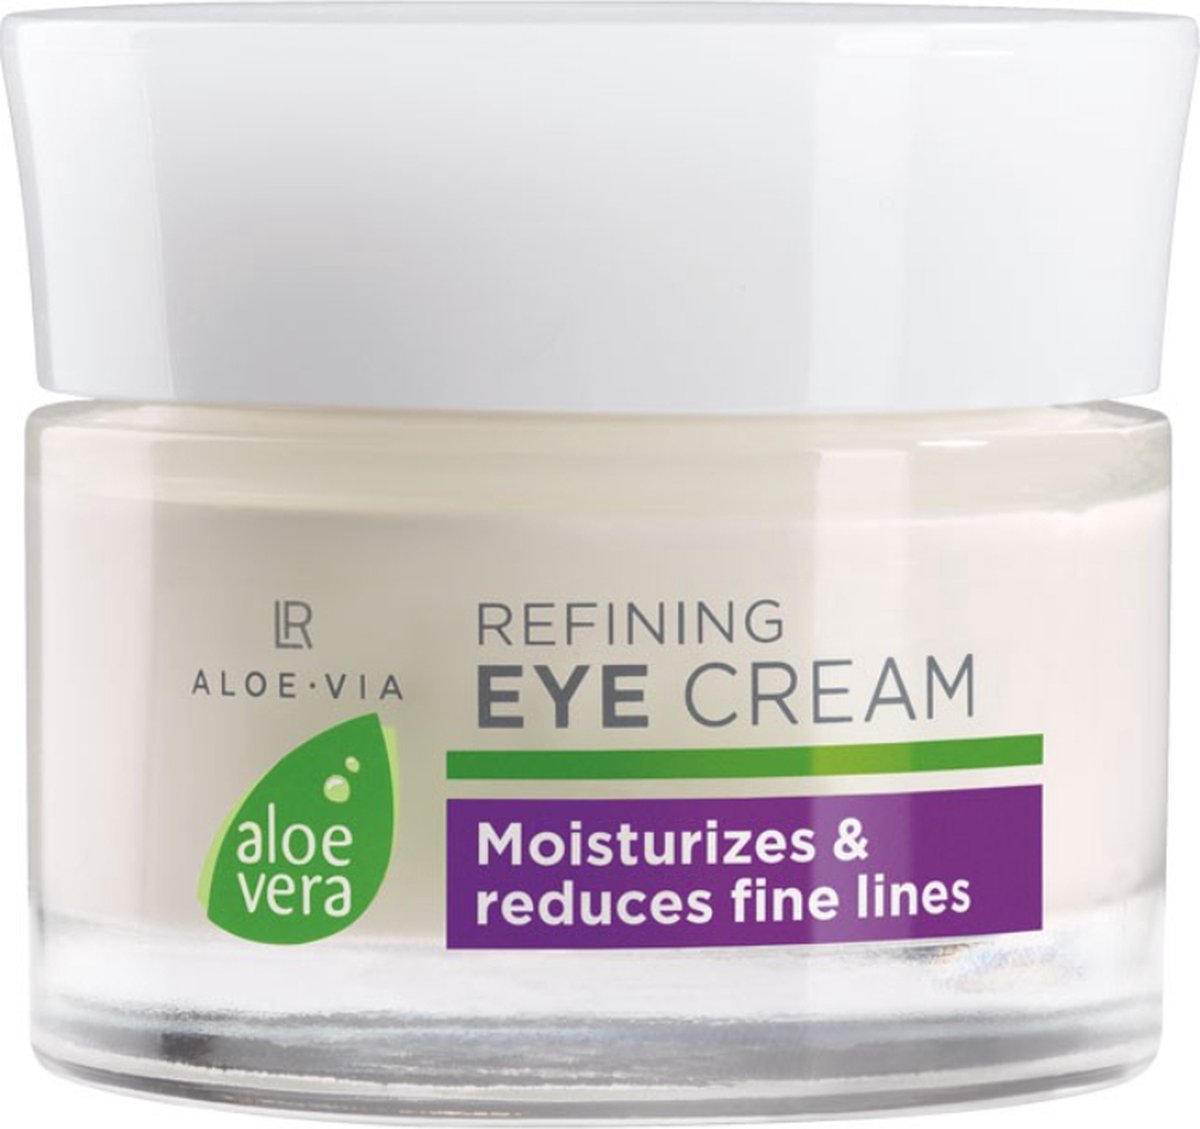 Aloe vera Refining Eye Cream